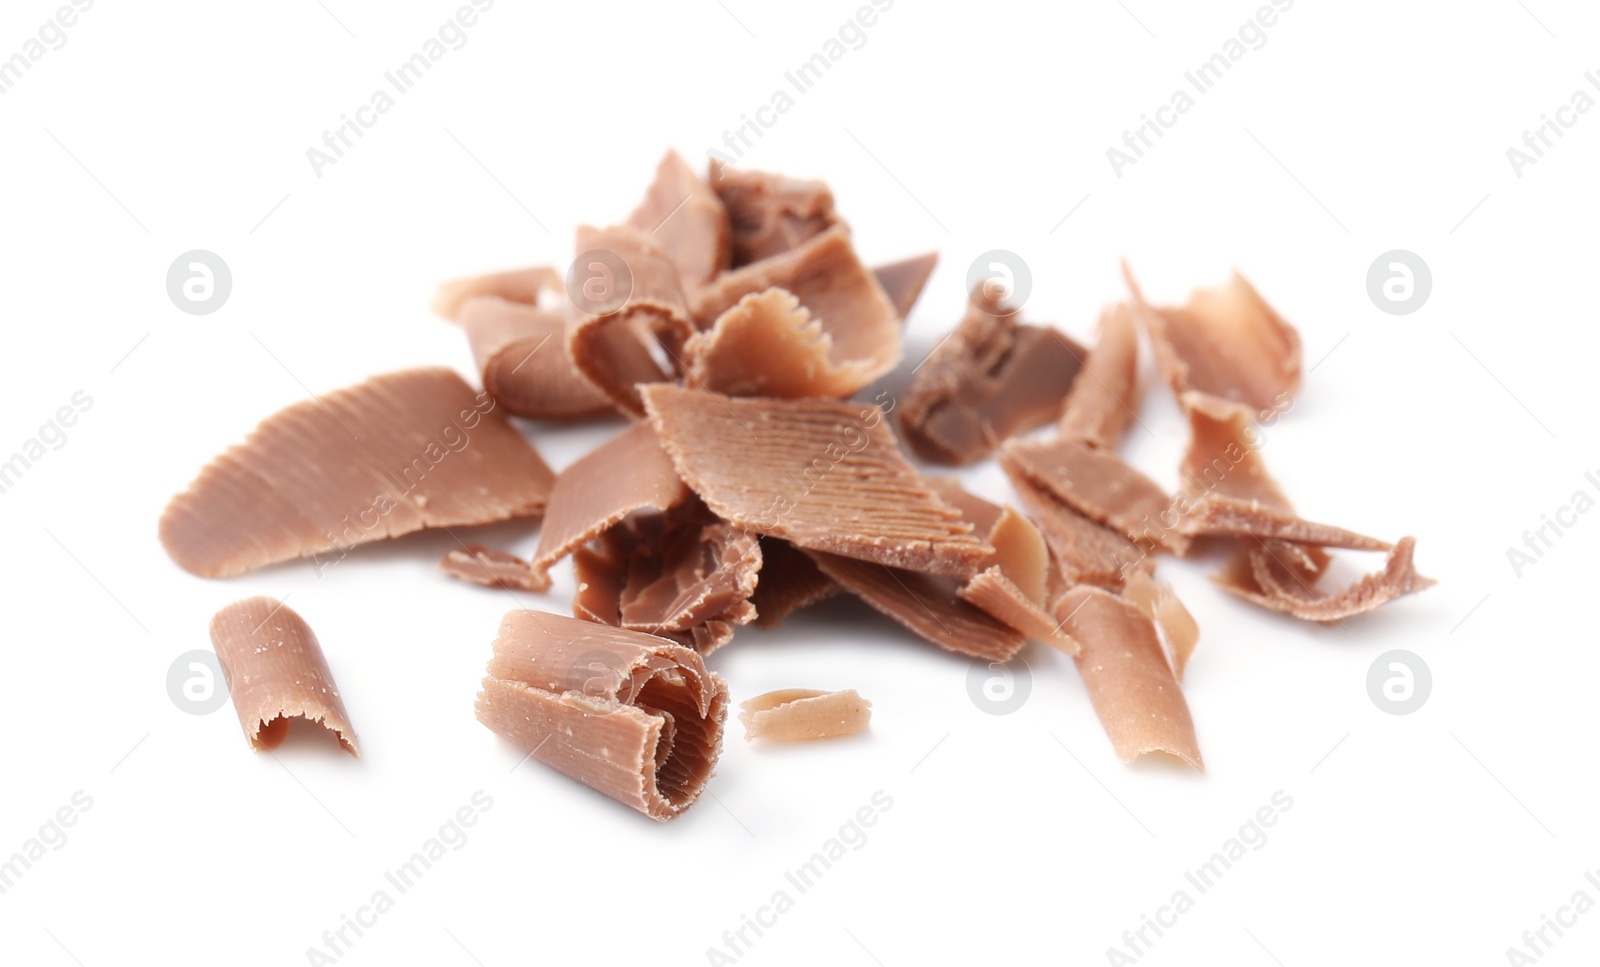 Photo of Pile of tasty chocolate shavings isolated on white